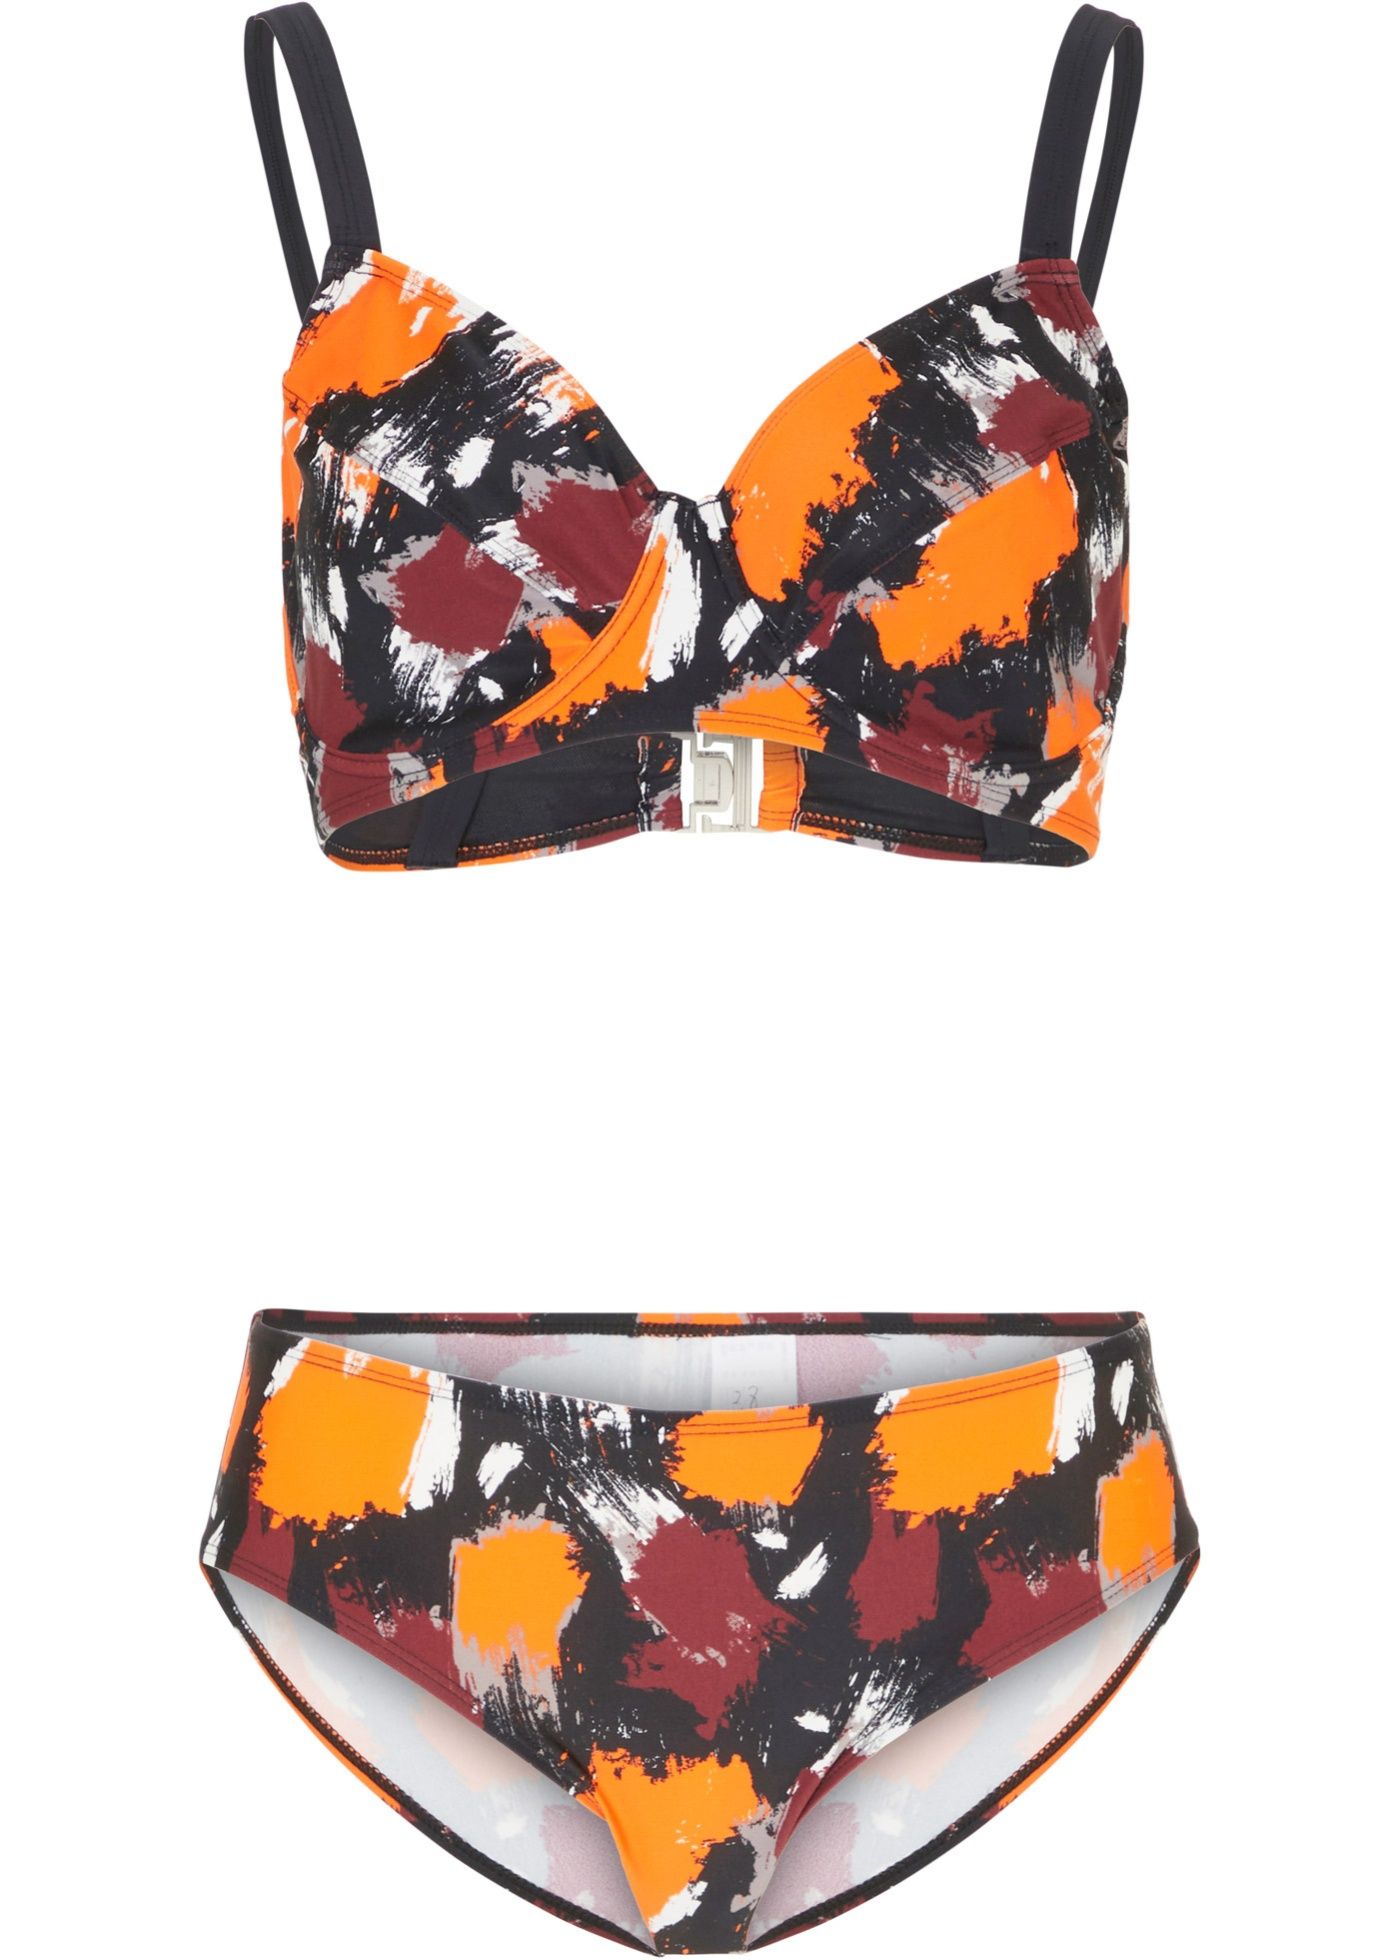 B.P.C bikini miękkie na fiszbinach kolorowe we wzory r.48 (95E)